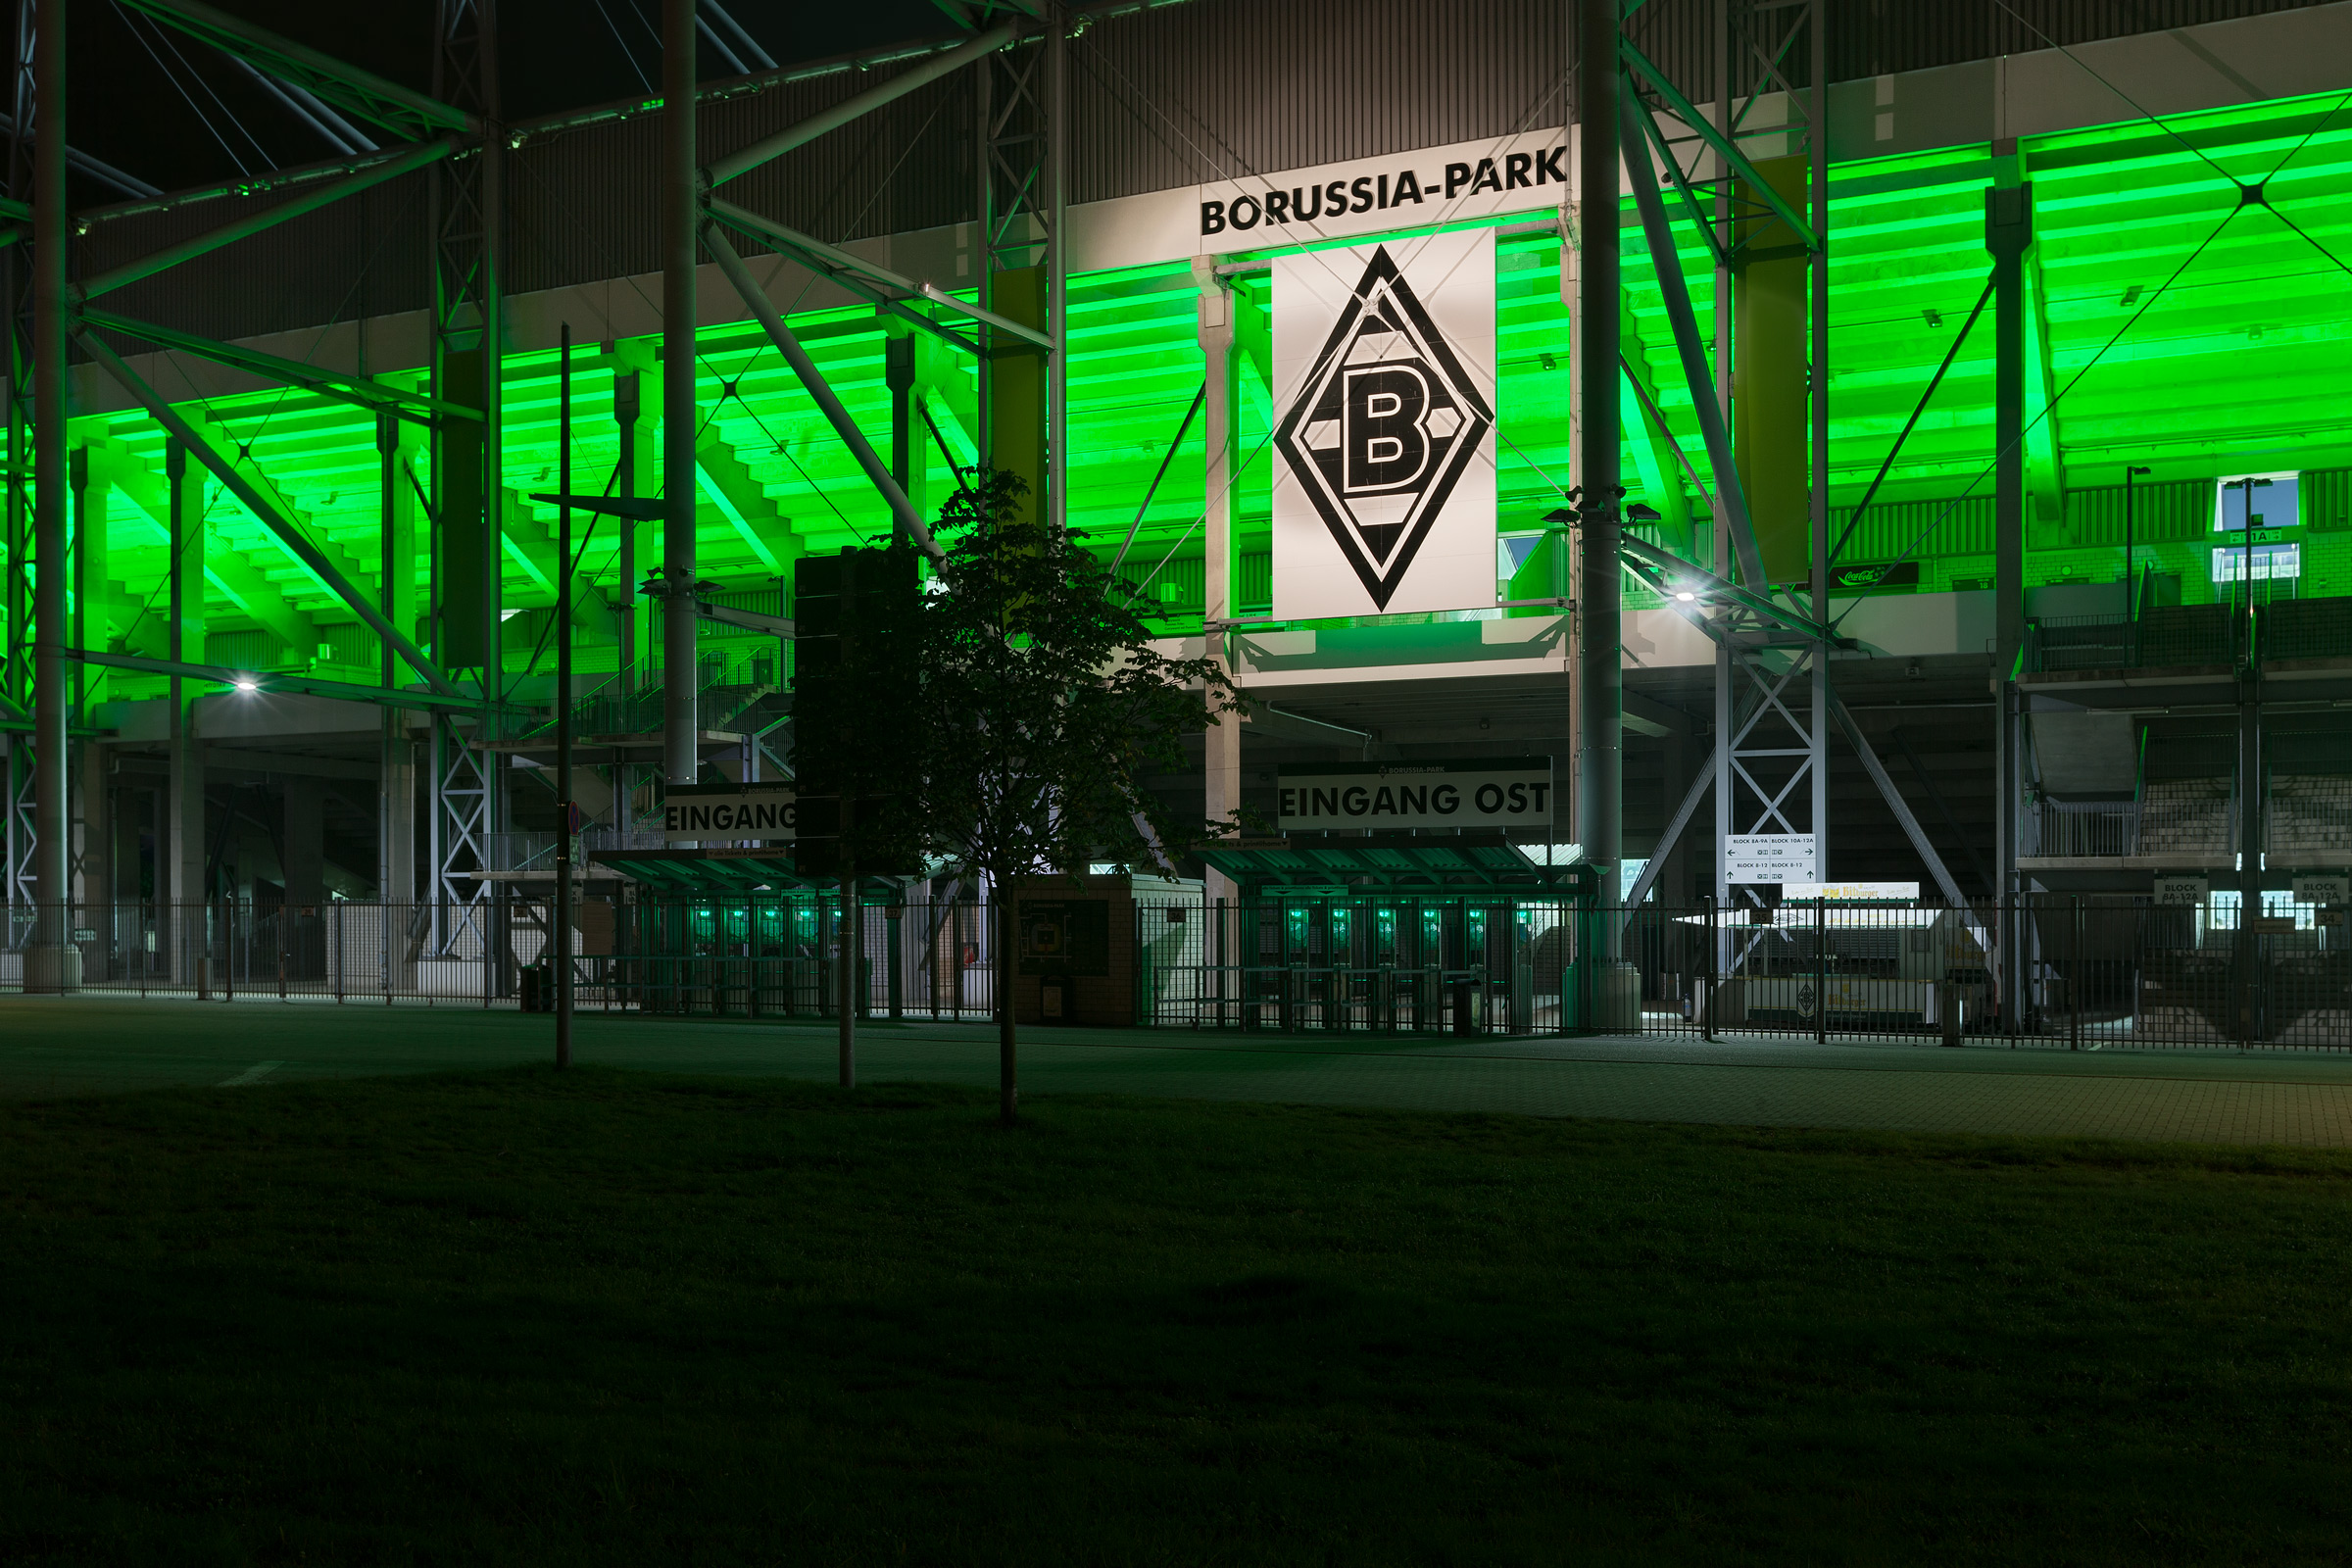 Borussia Park IV – Borussia Mönchengladbach – Eingang Ost